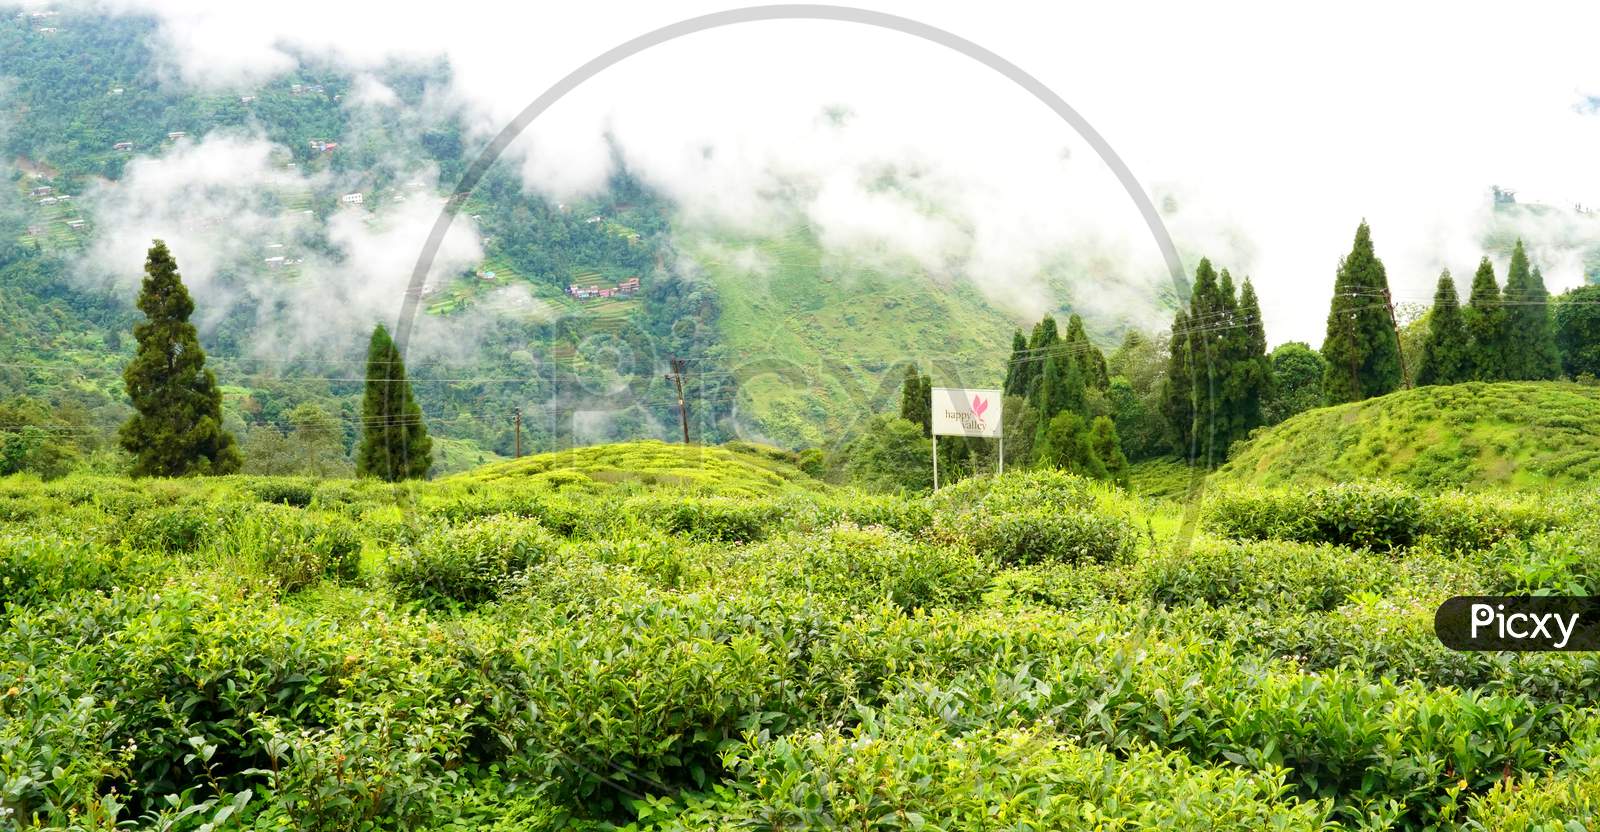 Tea garden landscape in Darjeeling, India